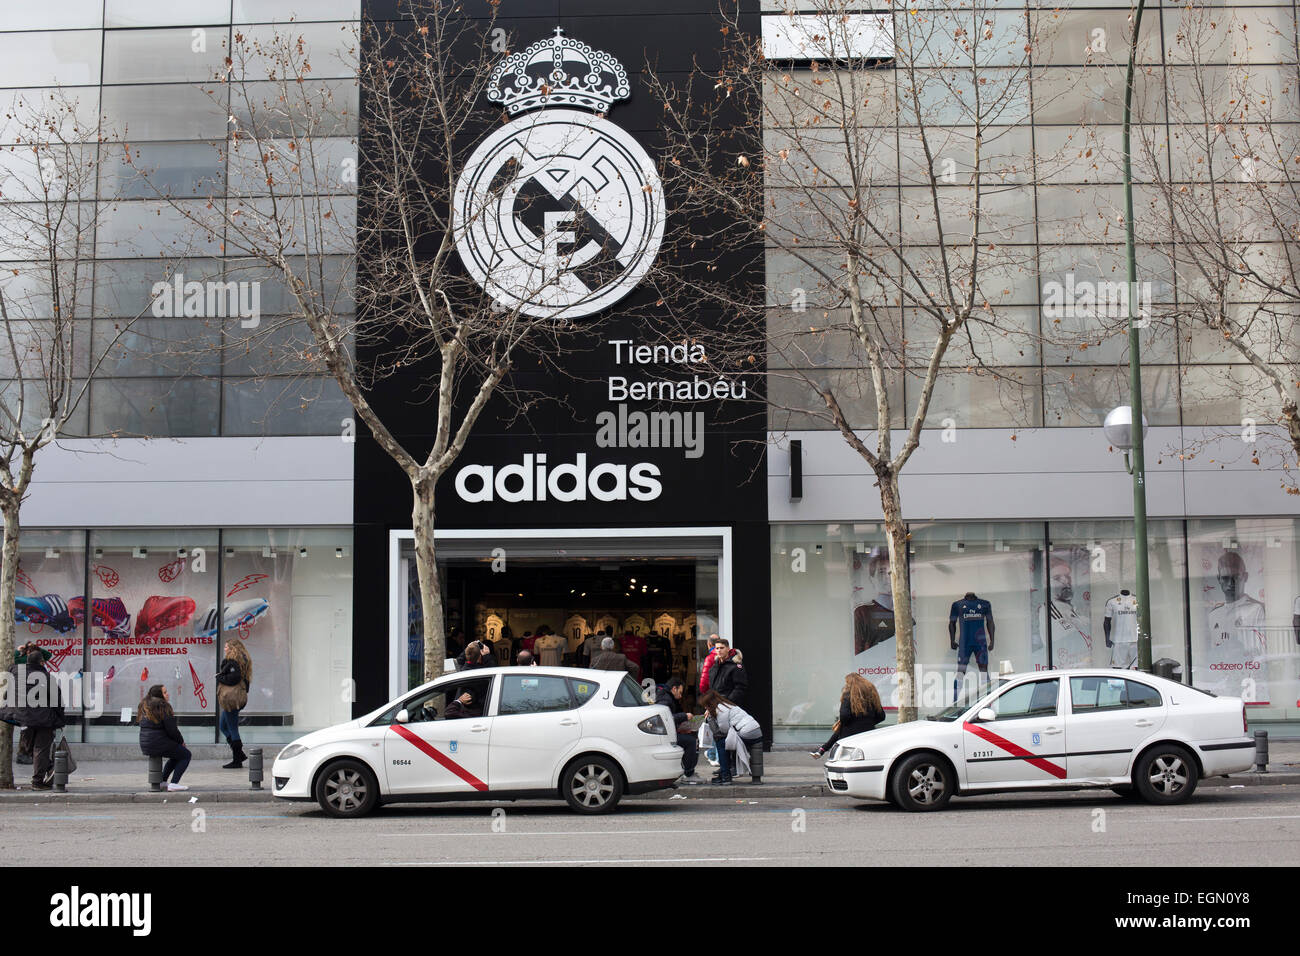 Real Madrid stadium Bernabeu club shop football Stock Photo: 79137724 - Alamy